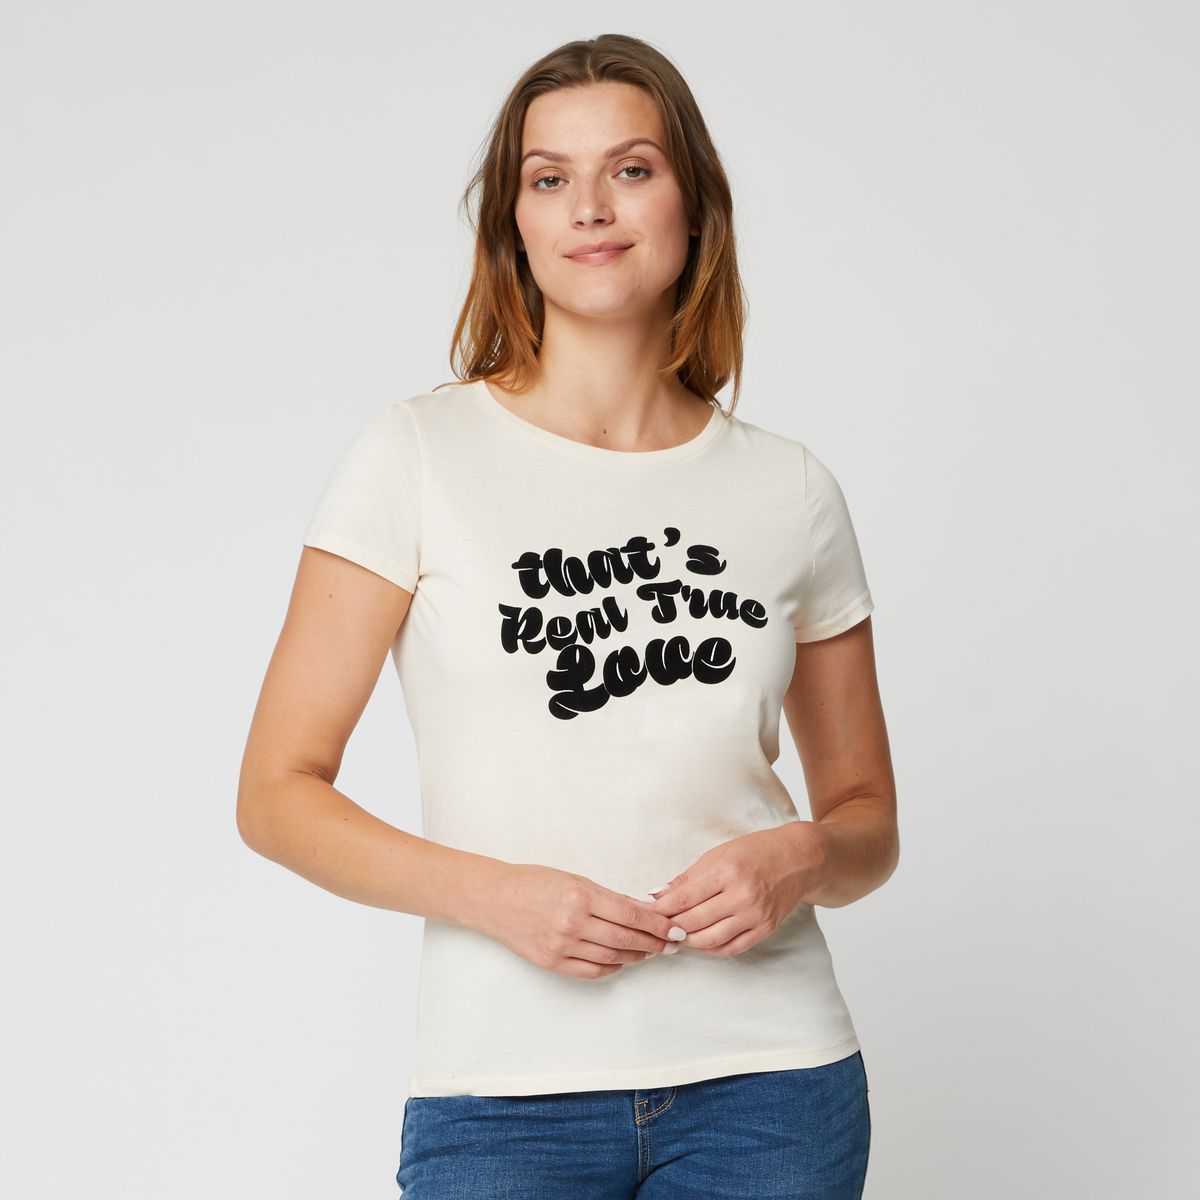 INEXTENSO T-shirt manches courtes écru femme